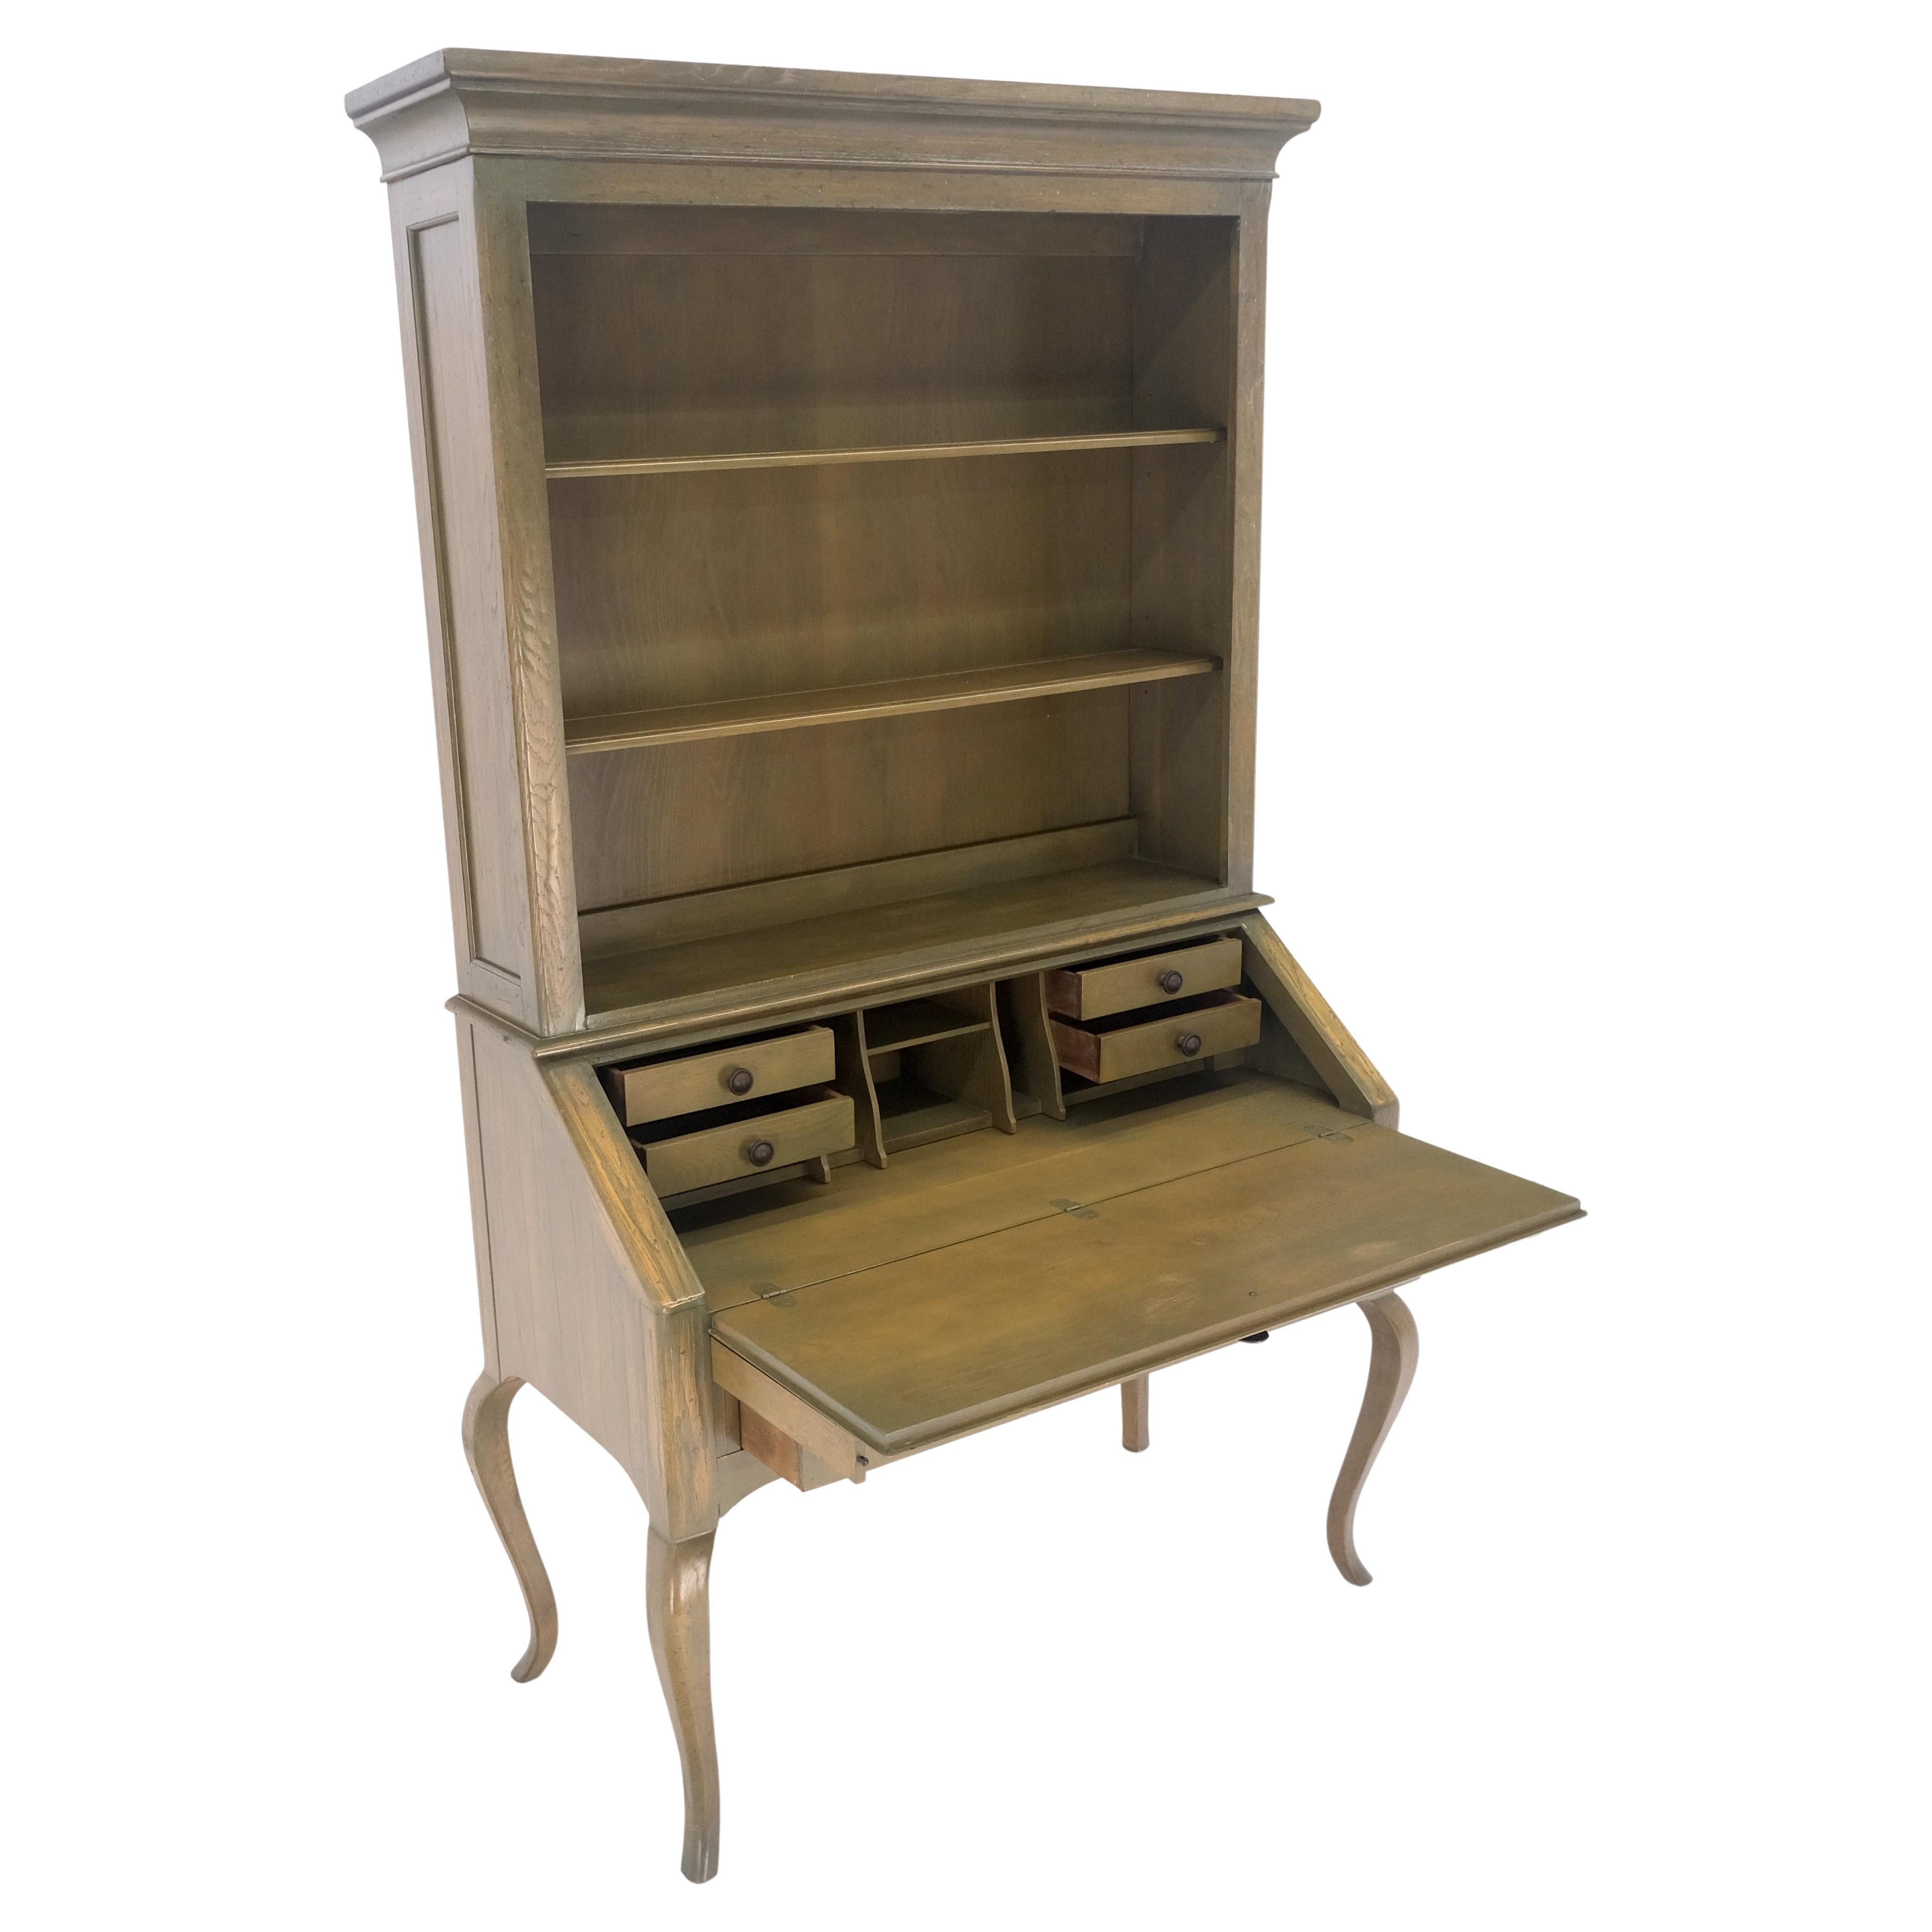 Henredon Solid Oak or Chestnut Olive Finish Wide Open Bookcase Secretary Desk Country French MINT!